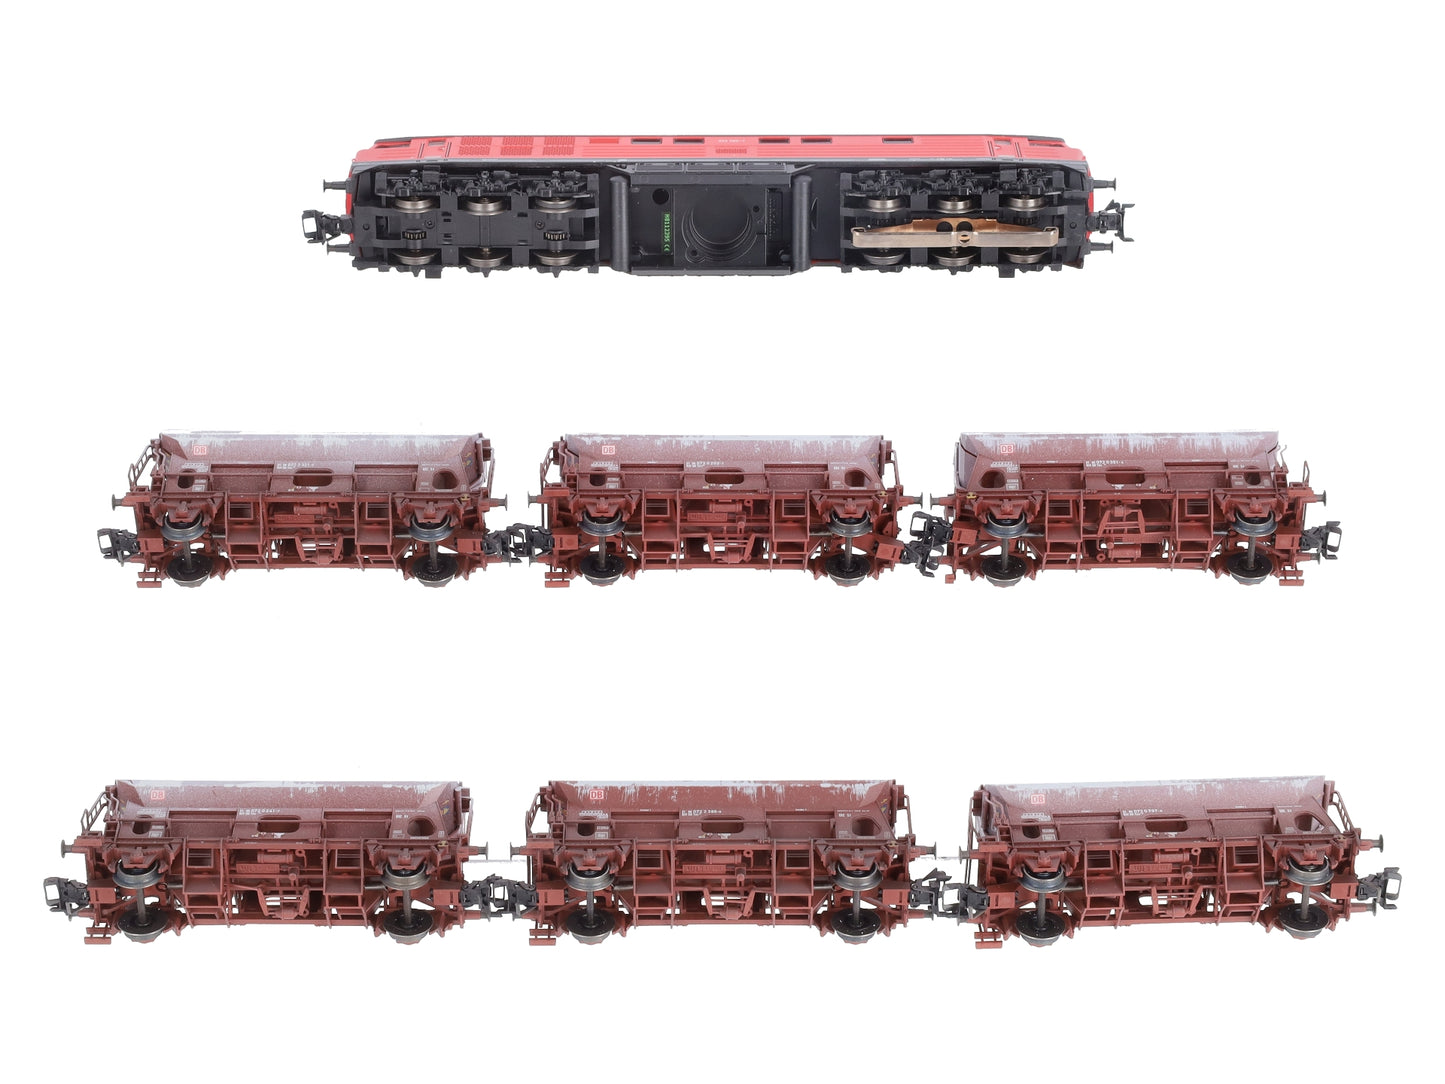 Marklin 26551 Lime Transport HO Gauge Diesel Freight Train Set EX/Box